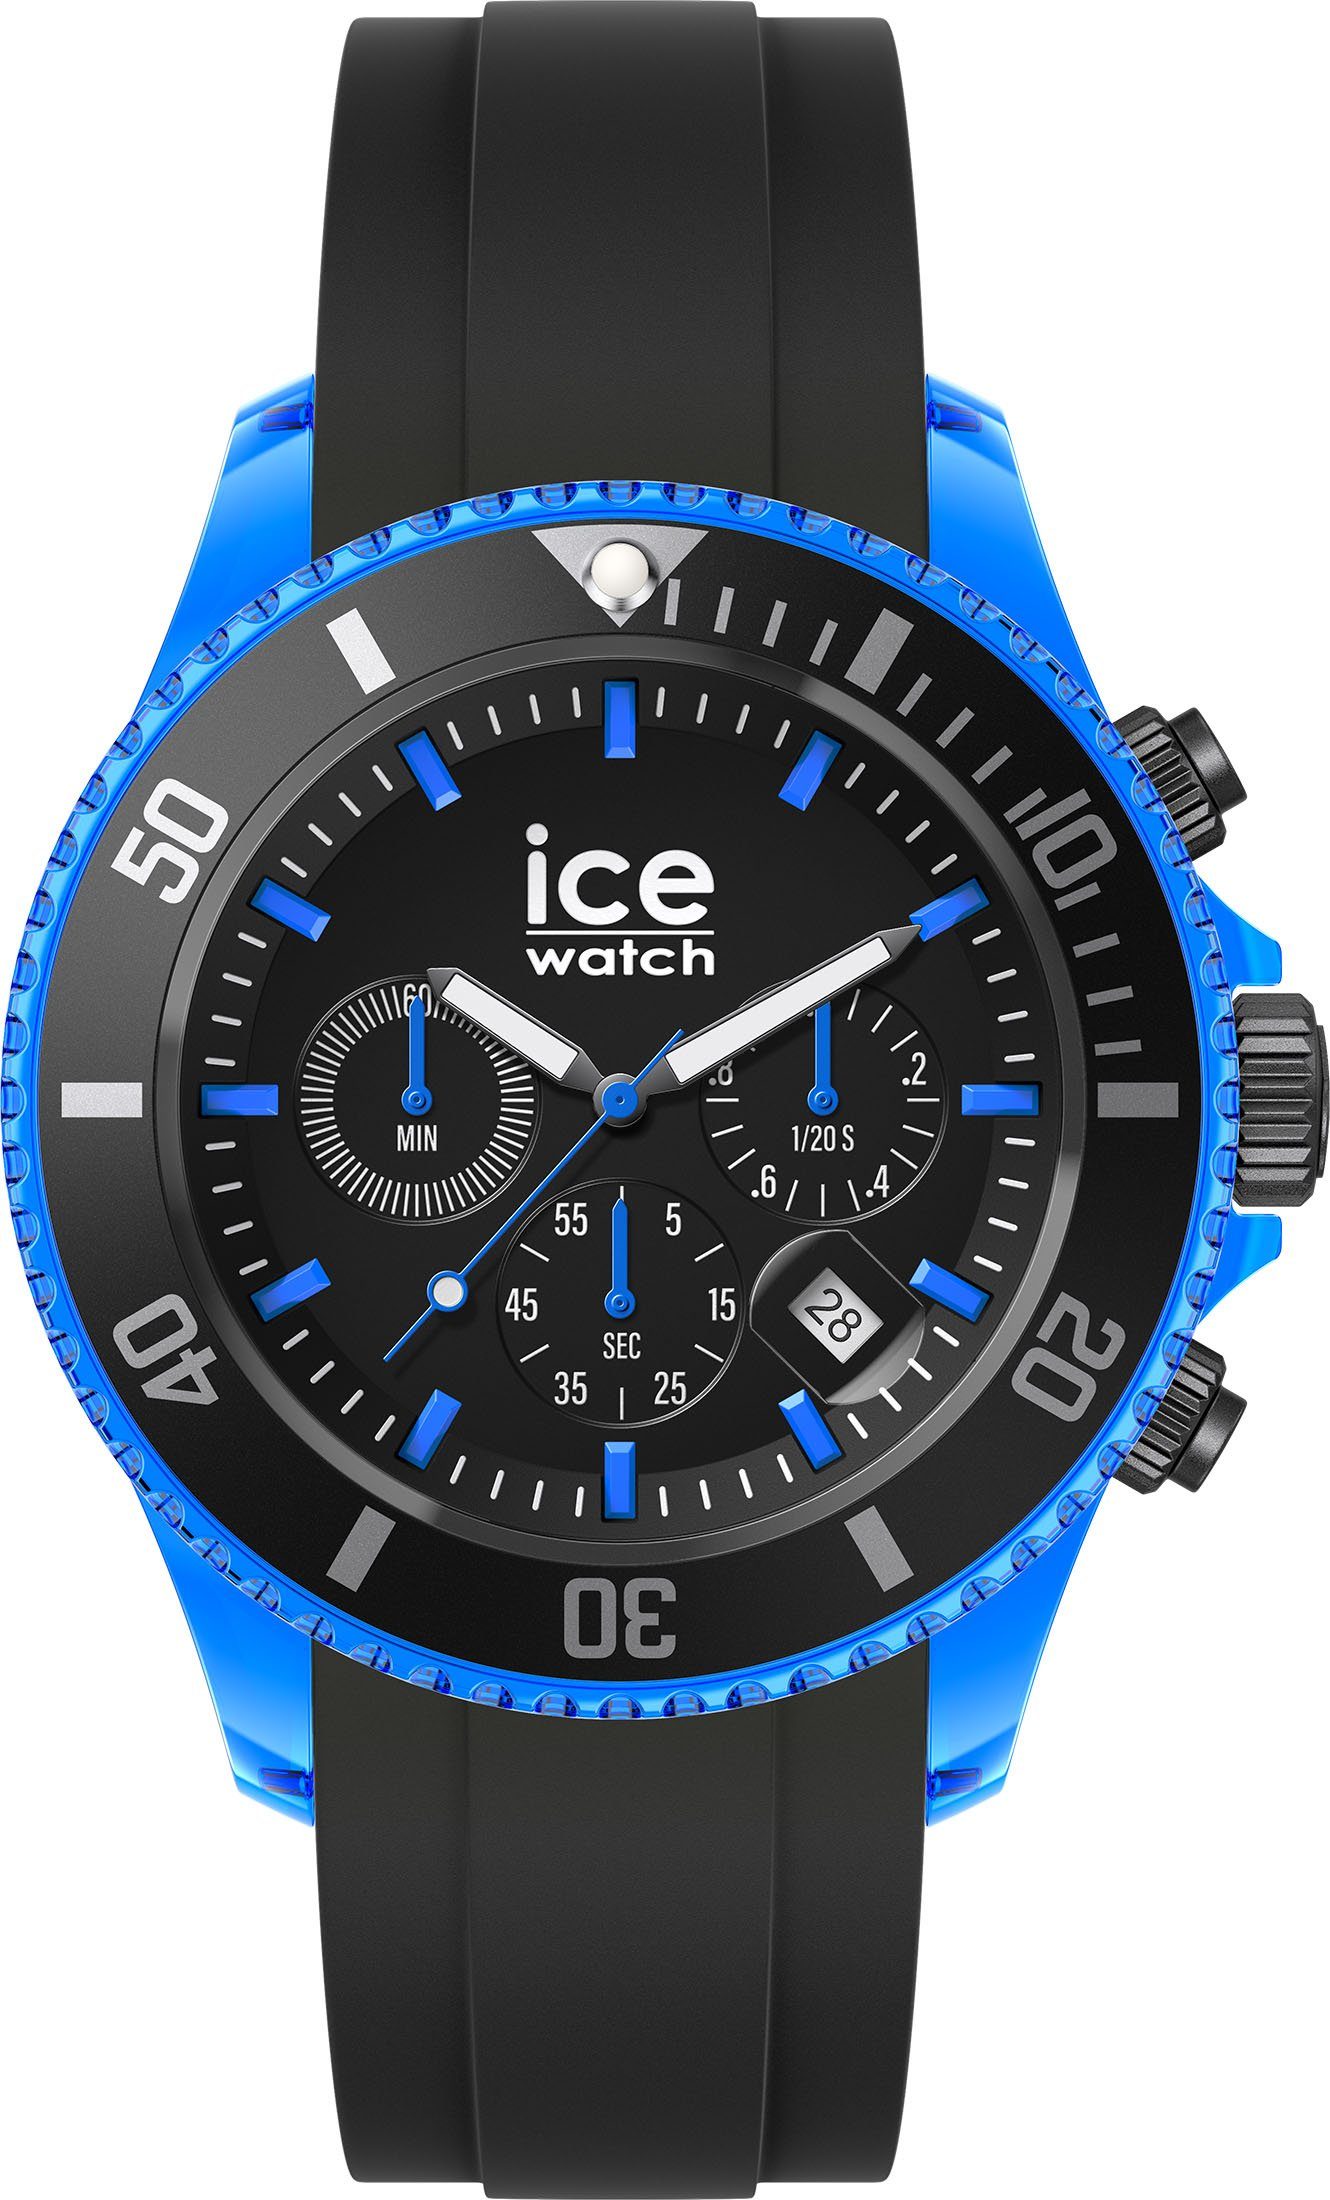 ice-watch Chronograaf ICE chrono - Black blue - Extra large - CH, 019844  online verkrijgbaar | OTTO